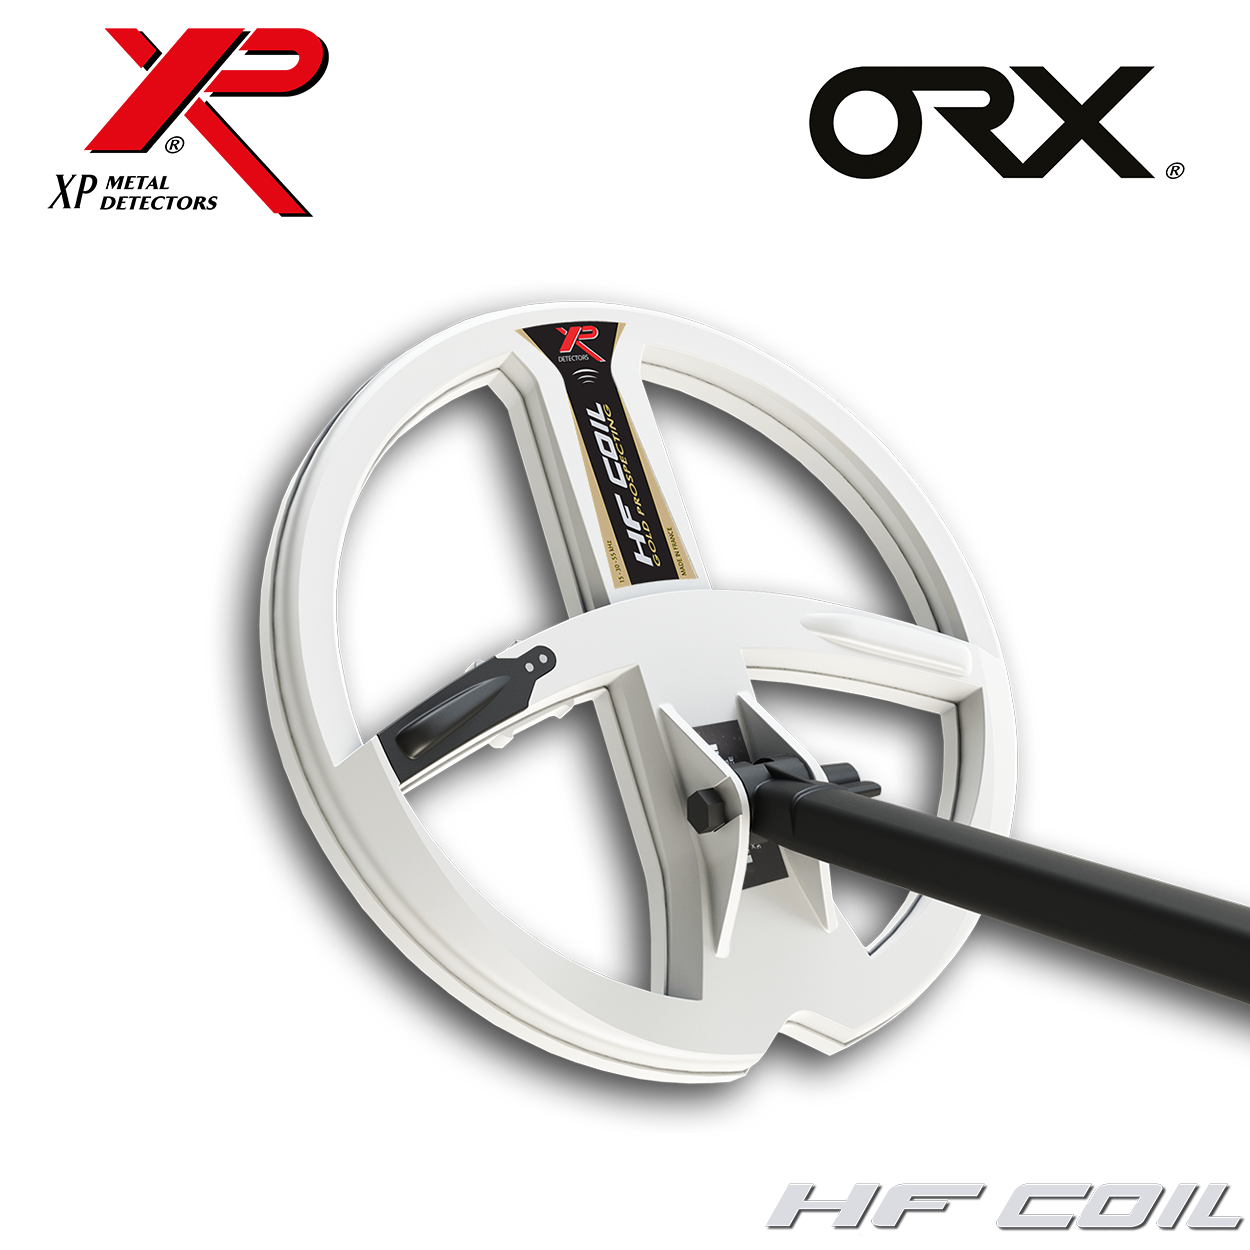 ORX Metalldetektor XP Komplettset 22 HF RC WSA